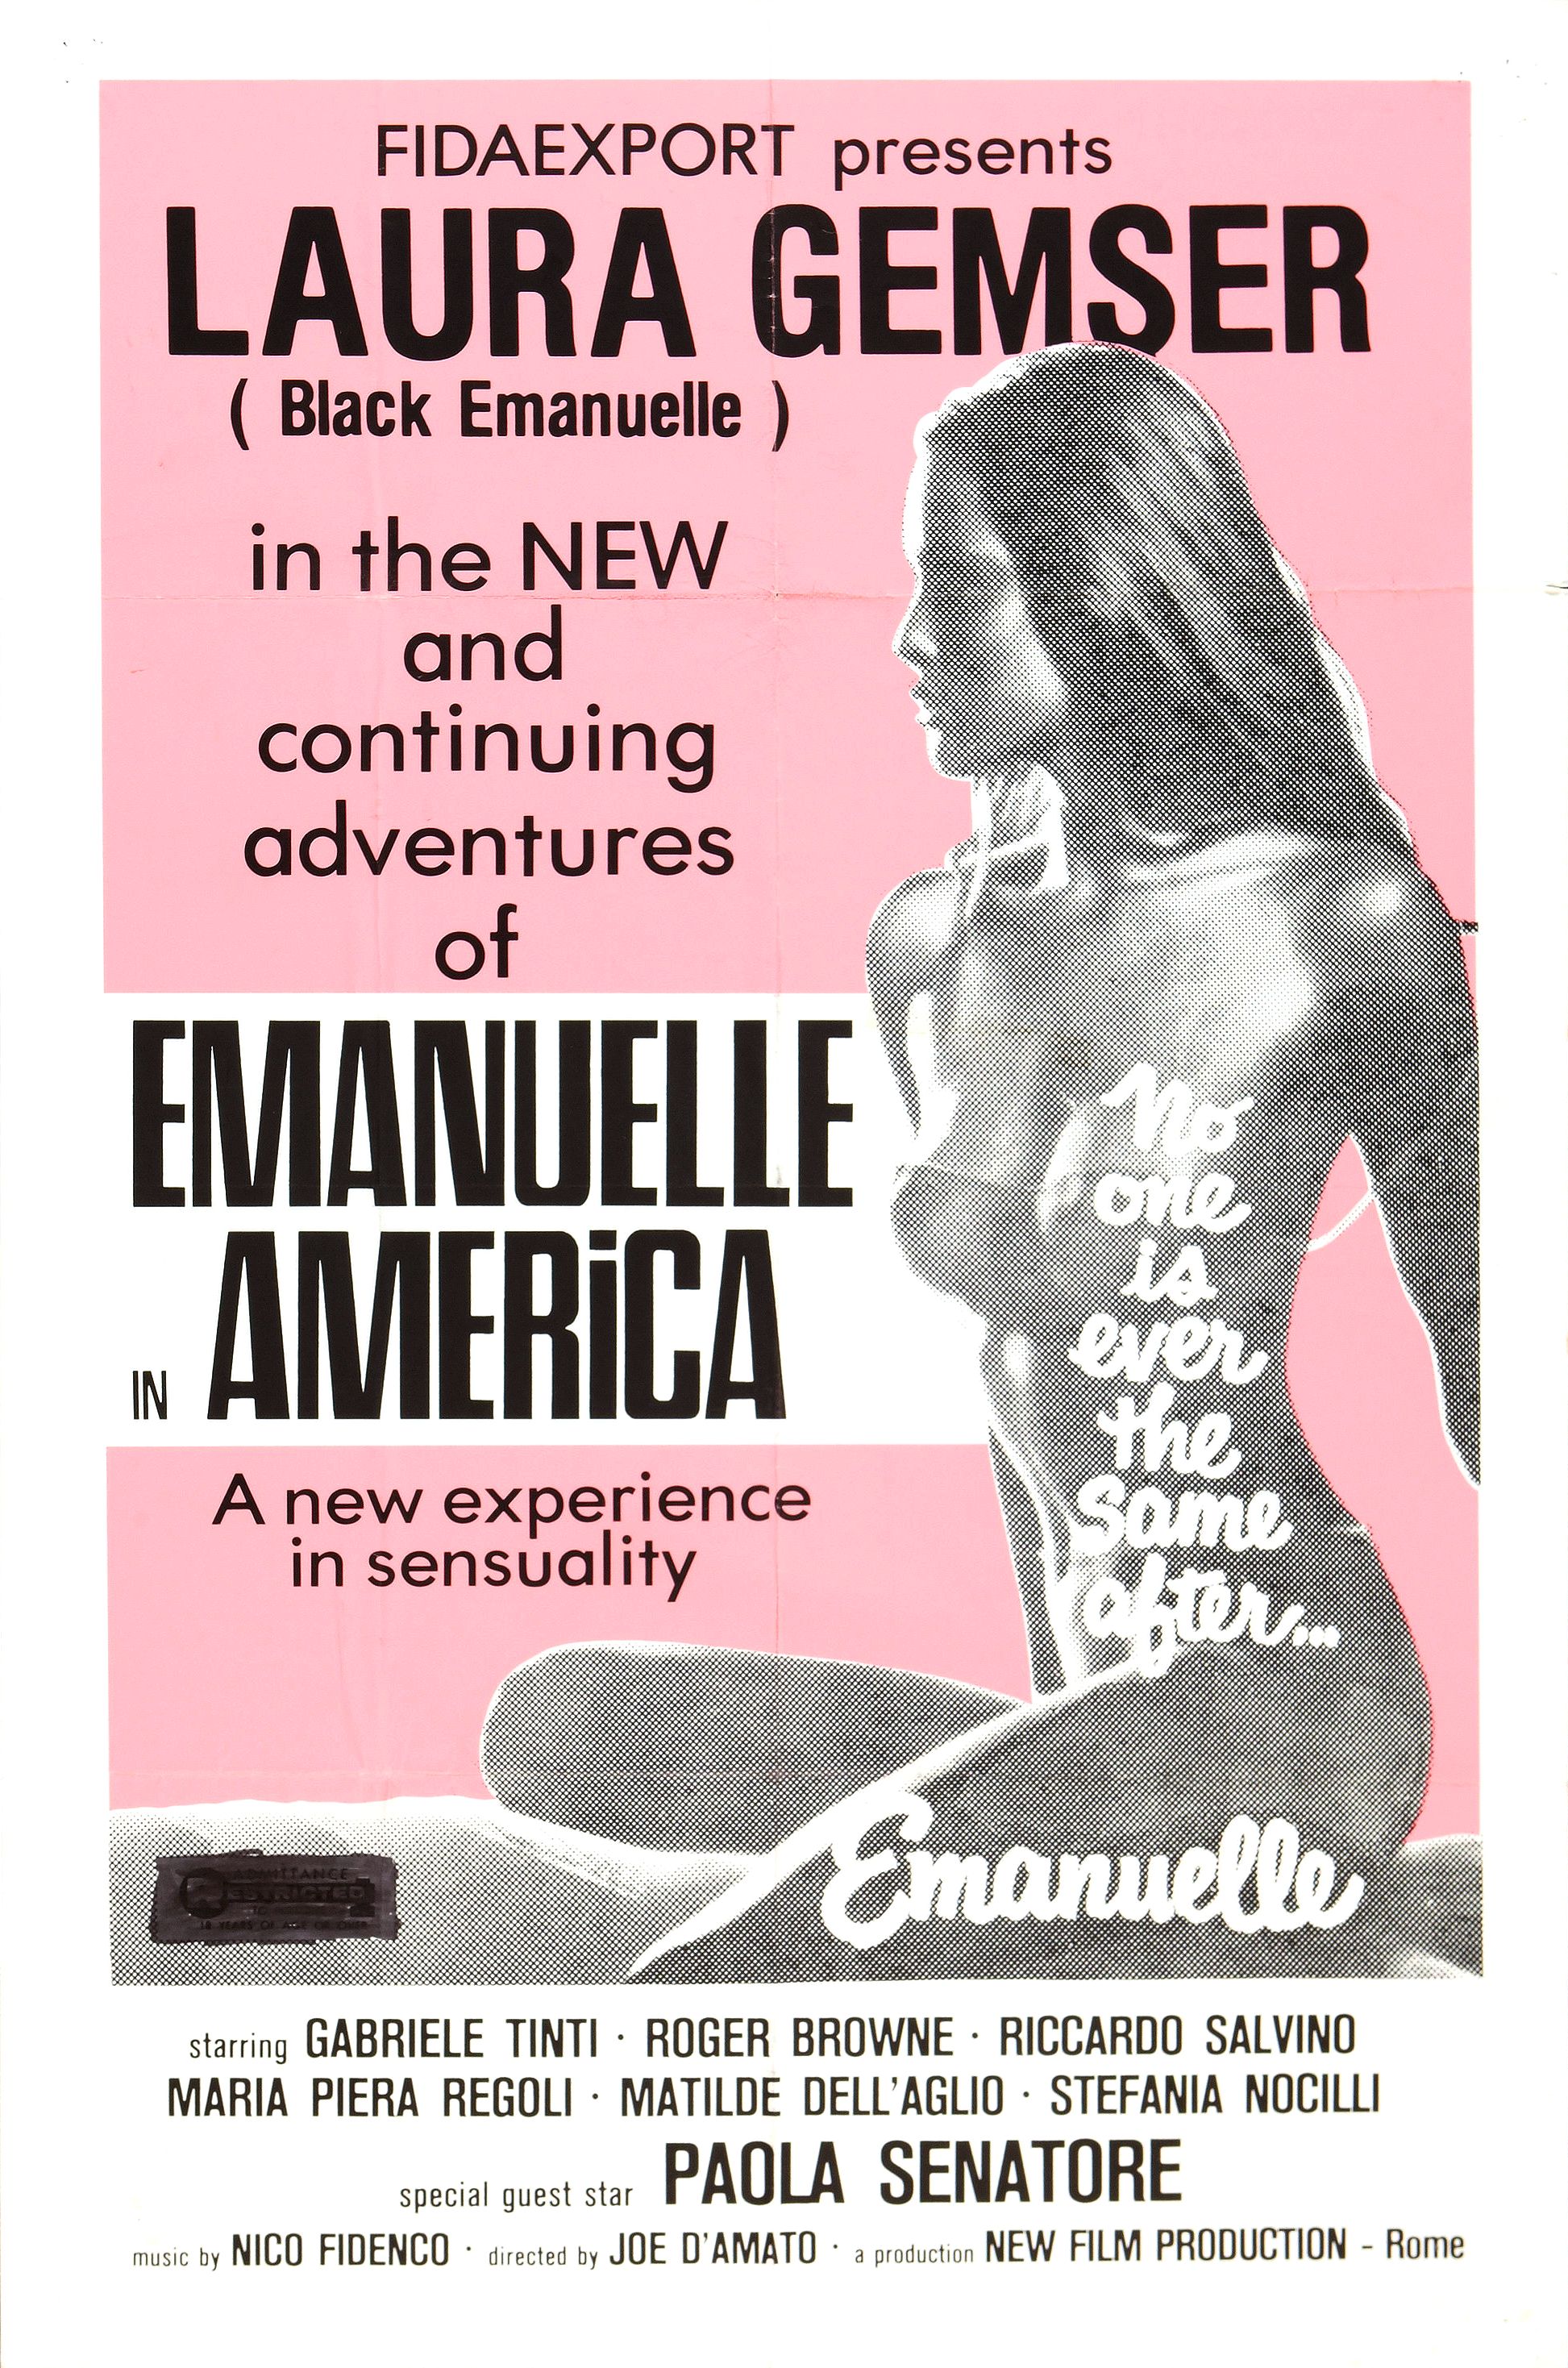 Emanuelle America